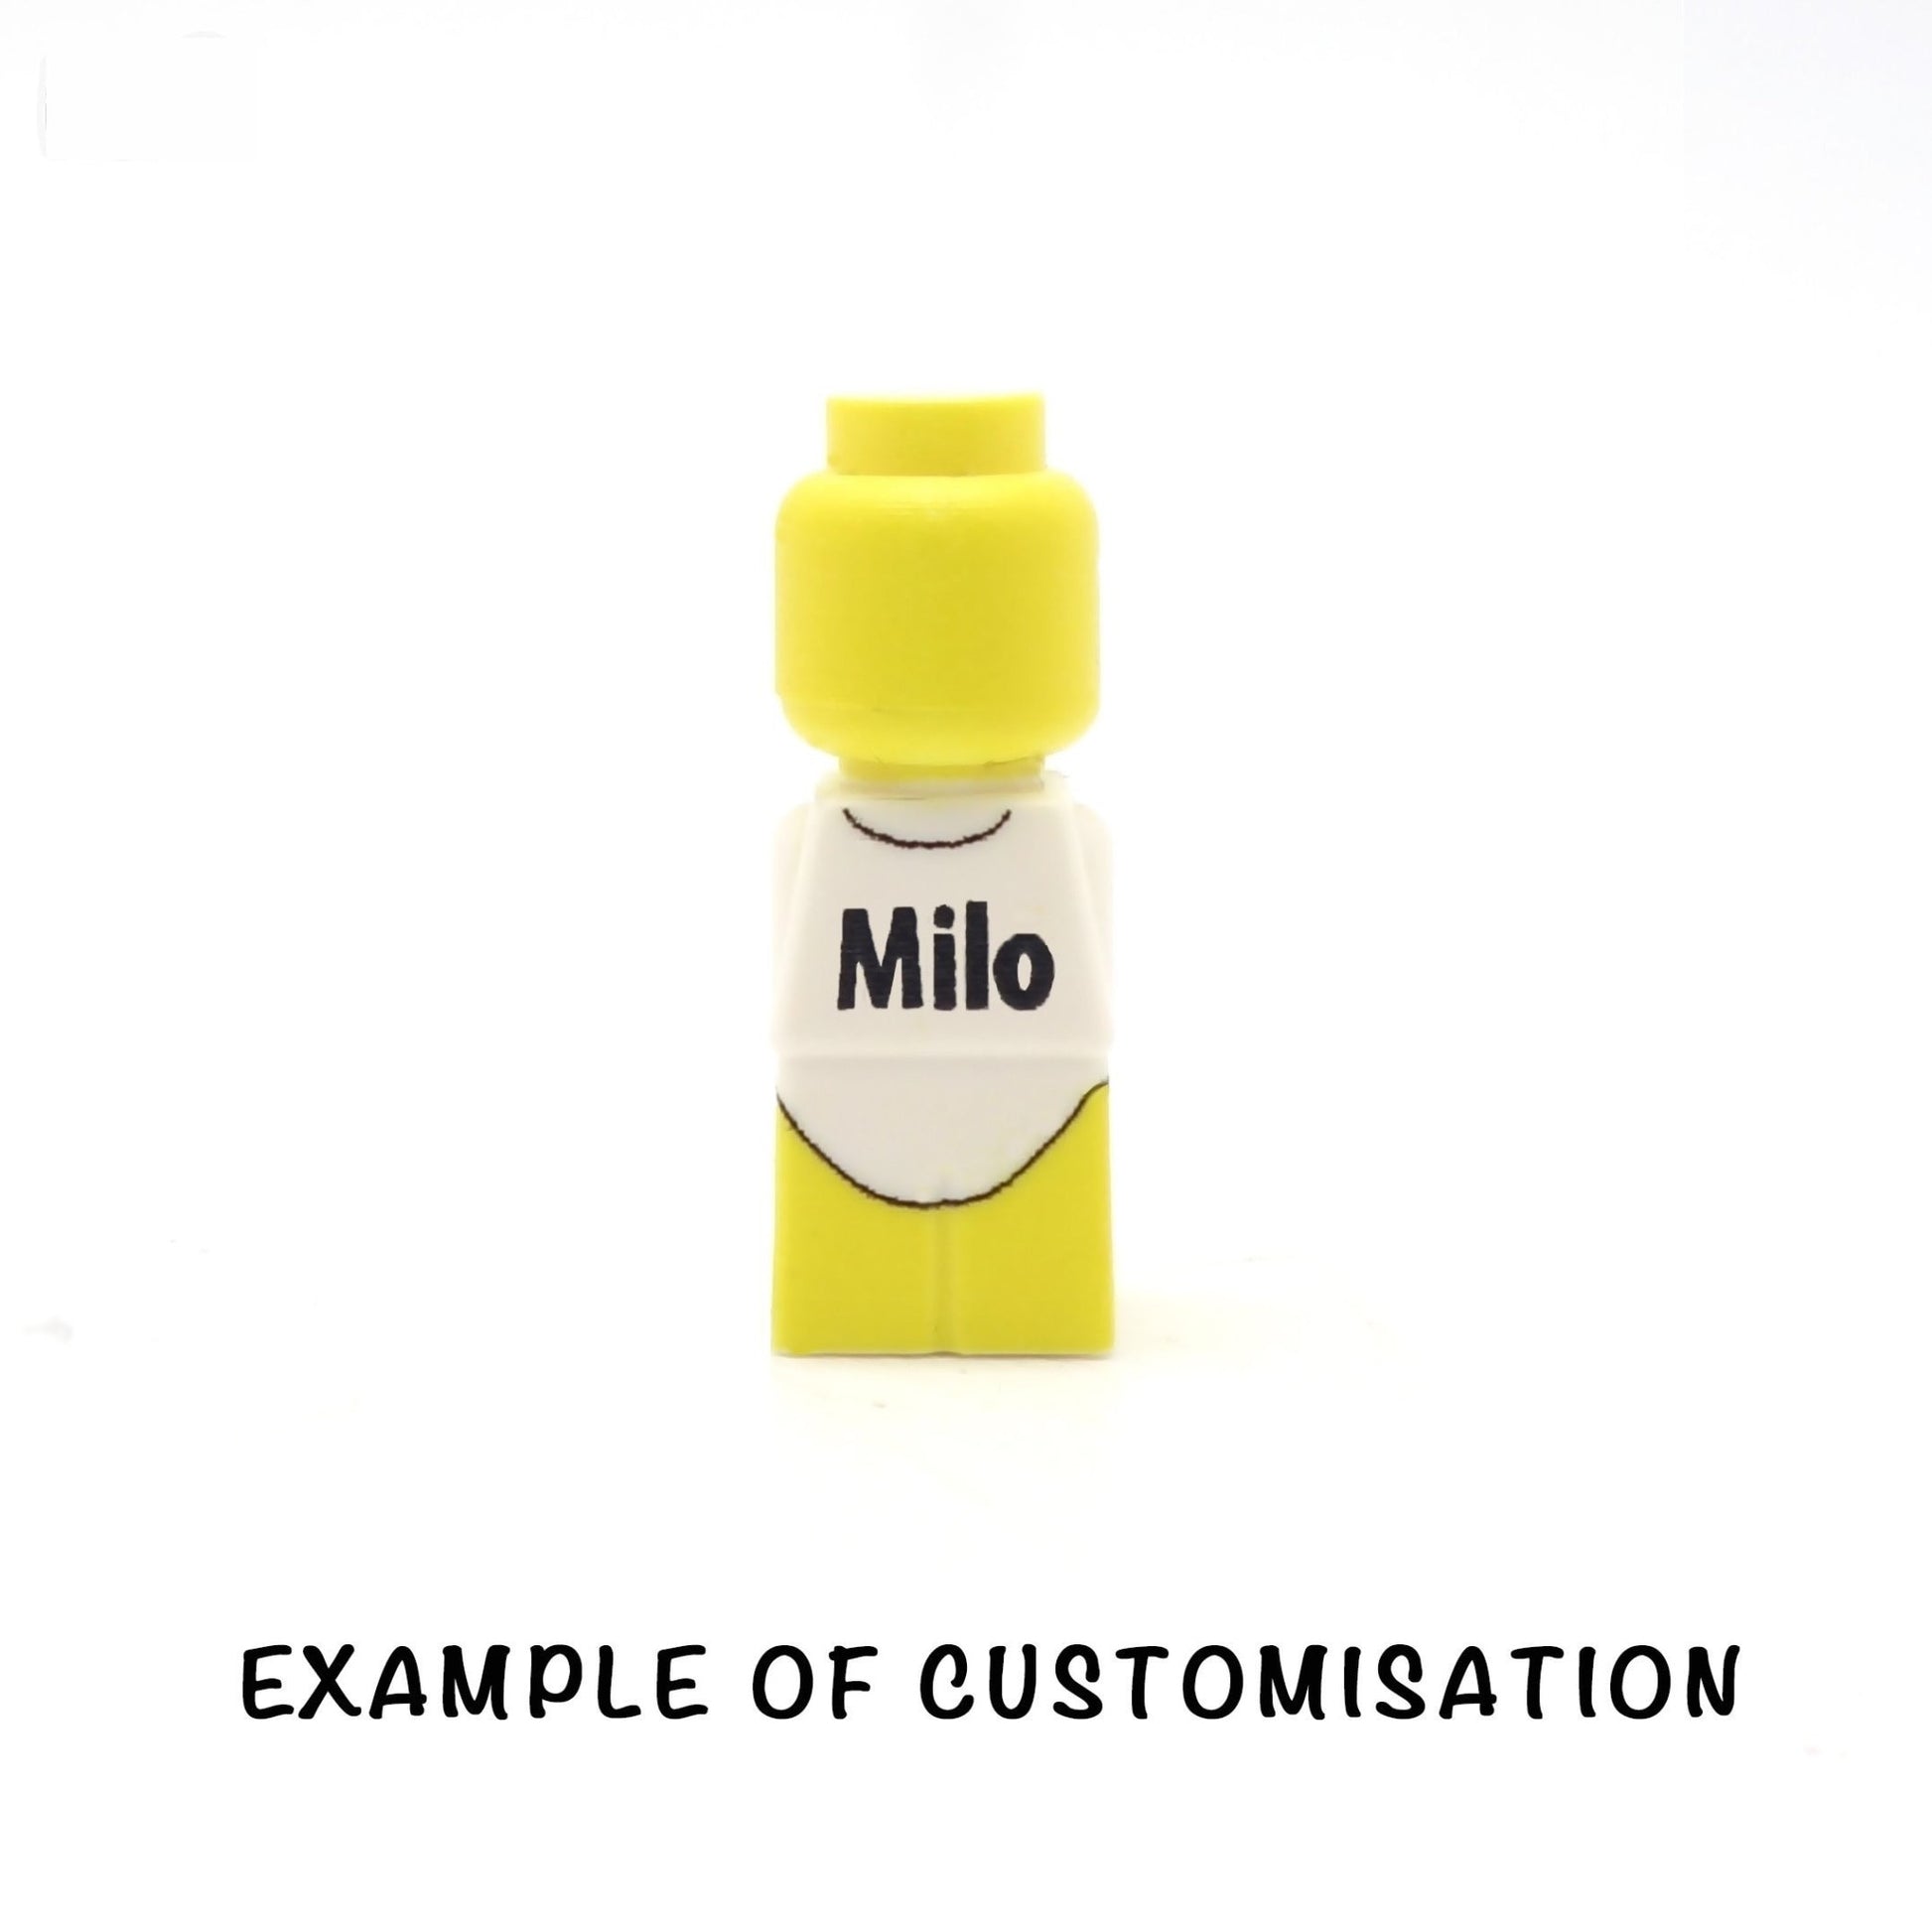 Custom Designed LEGO Microfigure Baby, Personalised